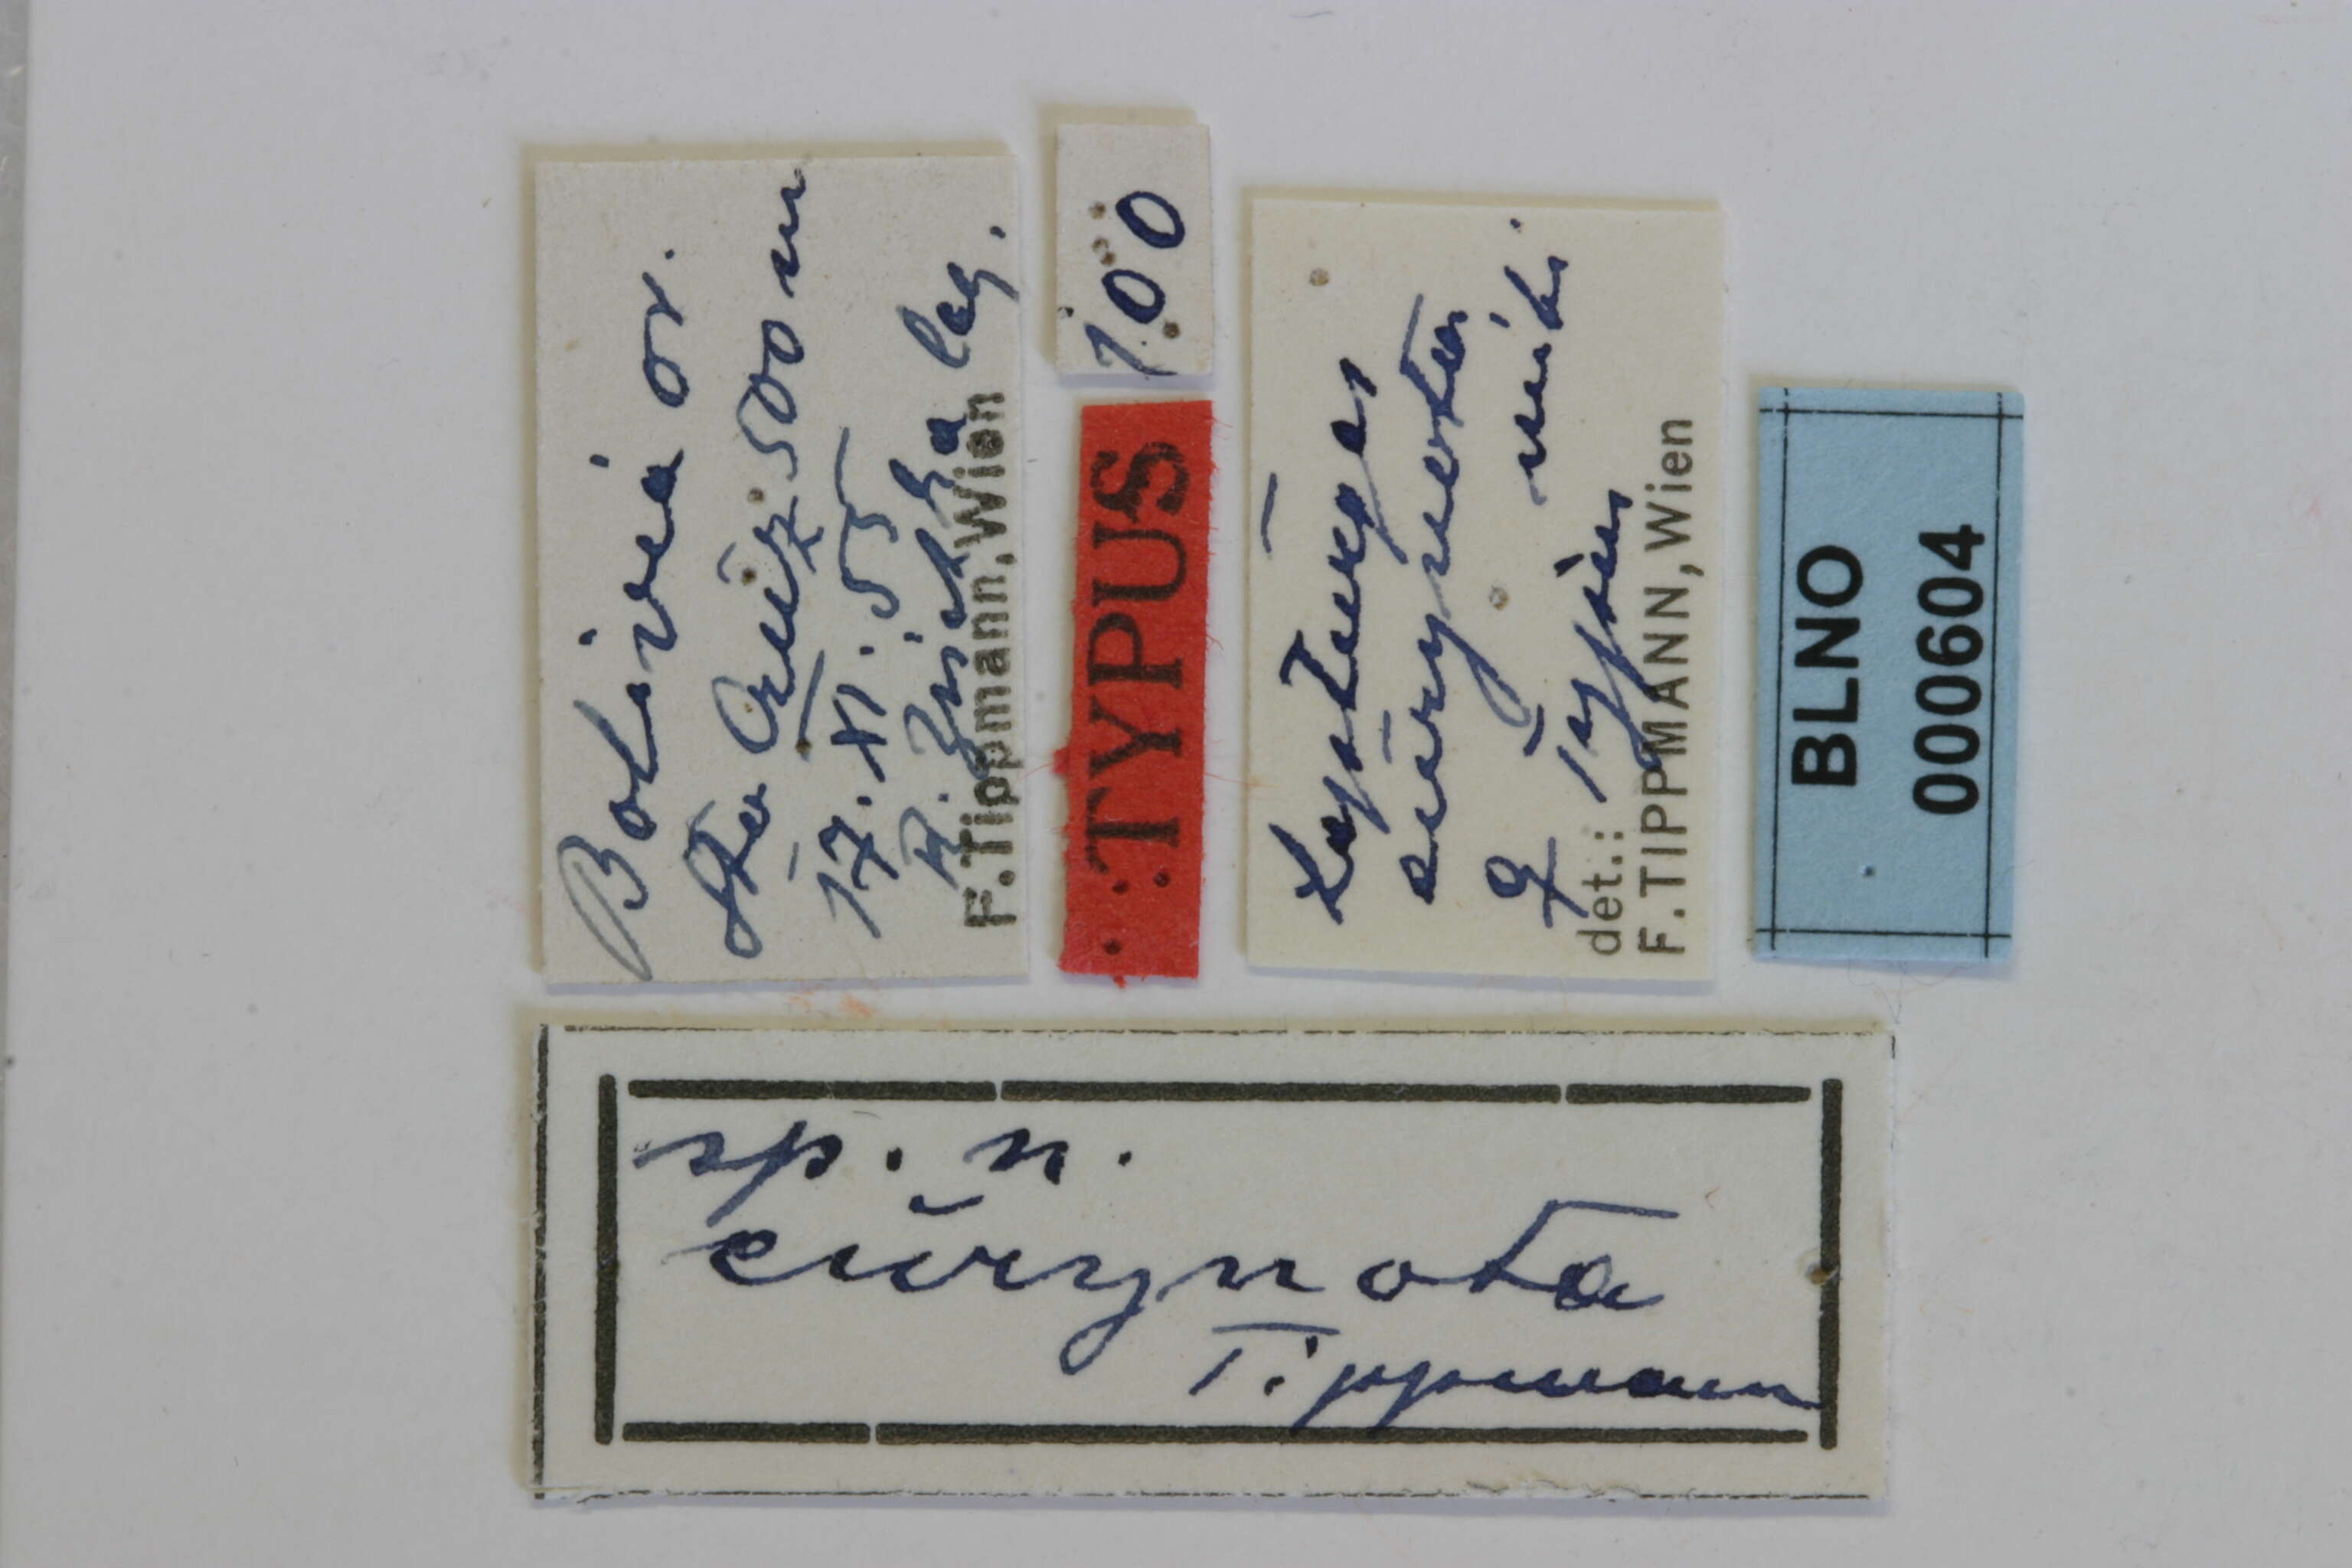 Image of Lepturges eurynota Tippmann 1960